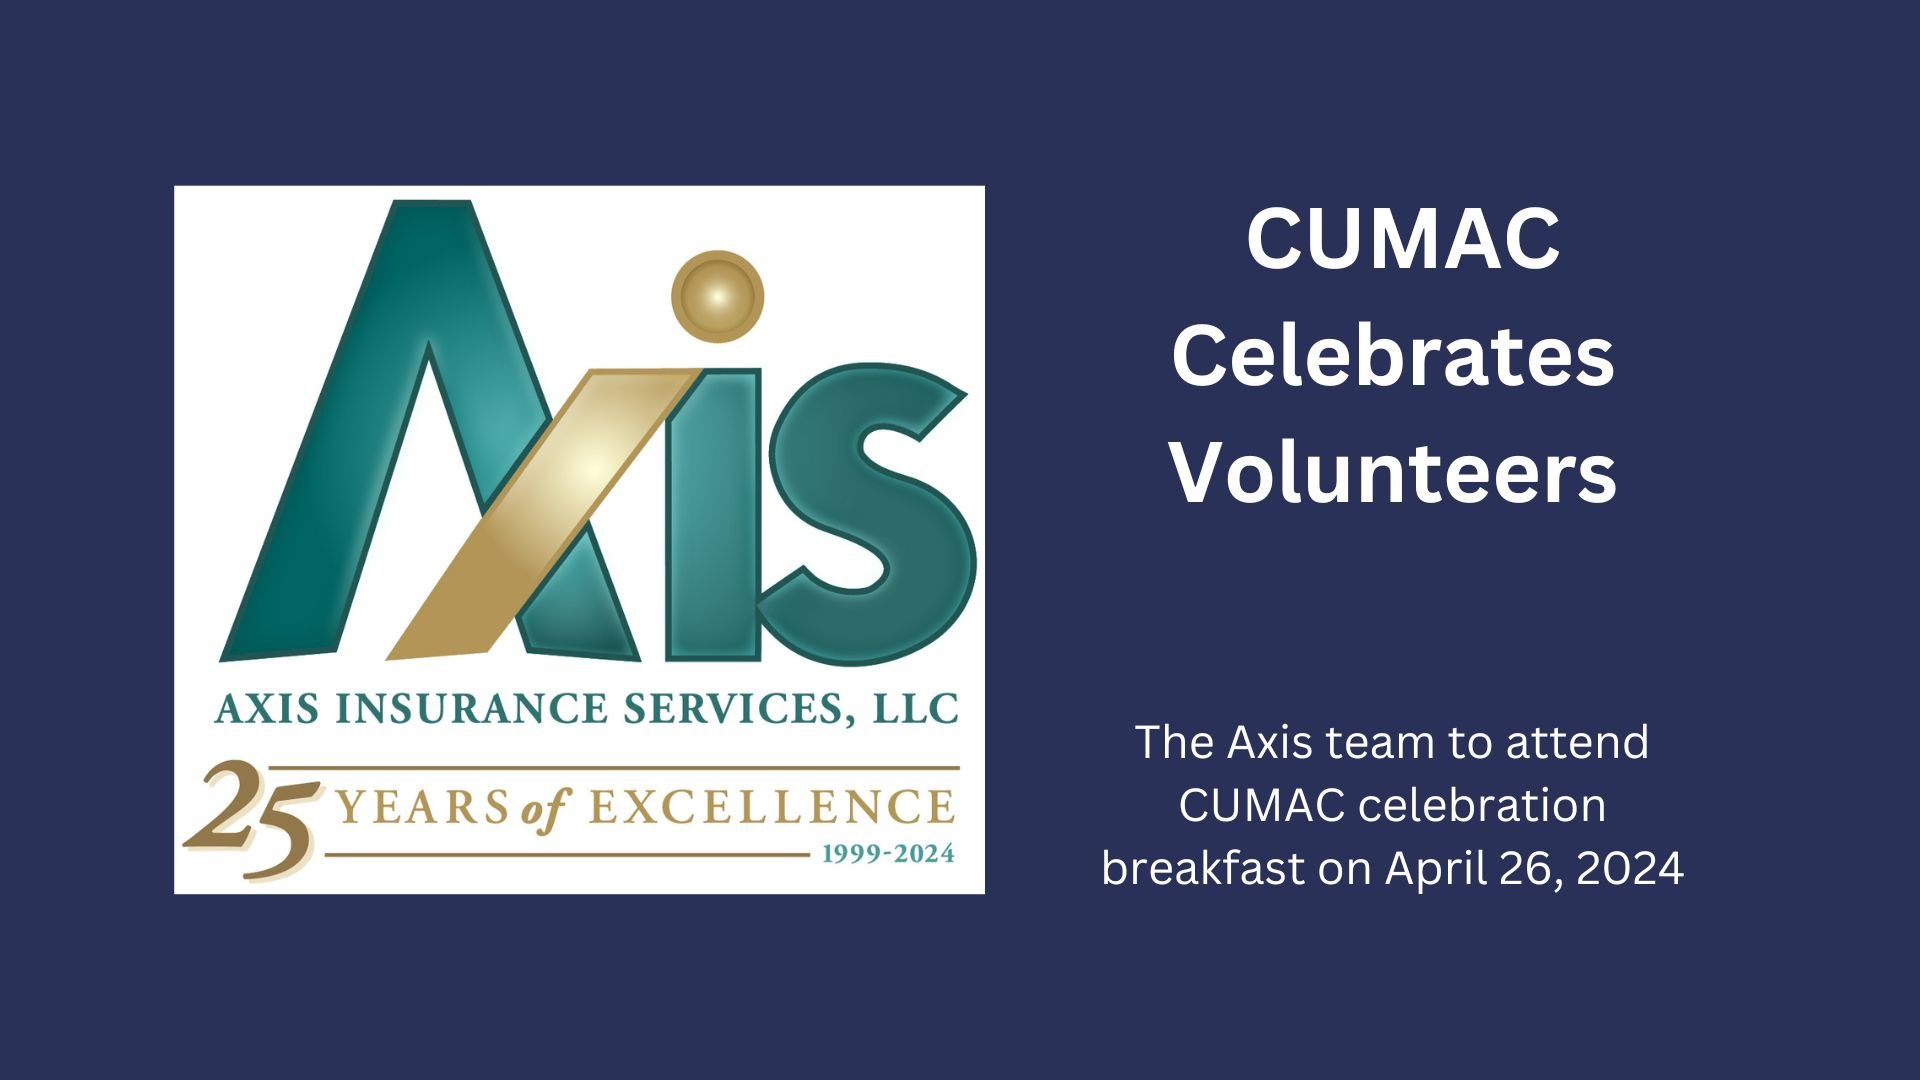 Axis Insurance Services, LLC to attend CUMAC Echo’s Annual Volunteer Appreciation Breakfast